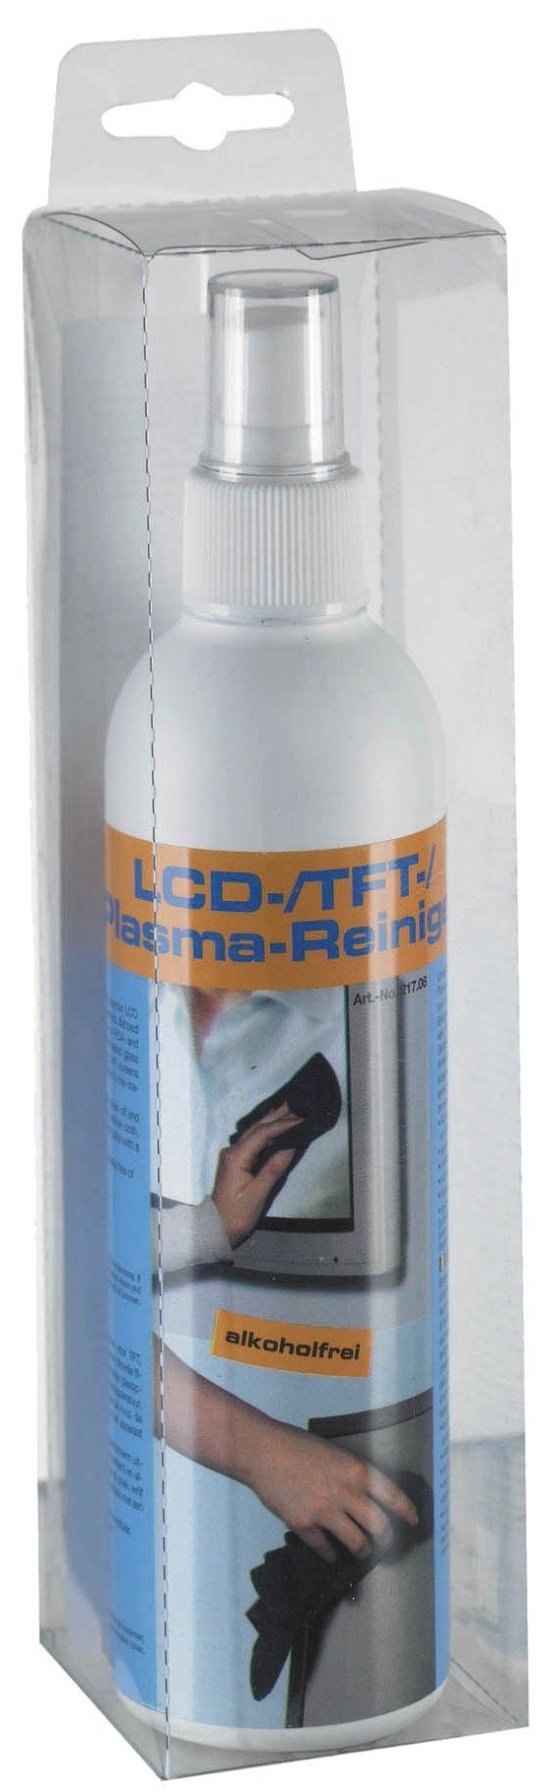 Lcd / tft / plasma Cleaning Pumpspray - Lcd / tft / plasma Cleaning Pumpspray 250ml - Beco (AVACC) - Lcd / tft / plasma Cleaning Pumpspray - Produtos - Beco - 4000976217064 - 